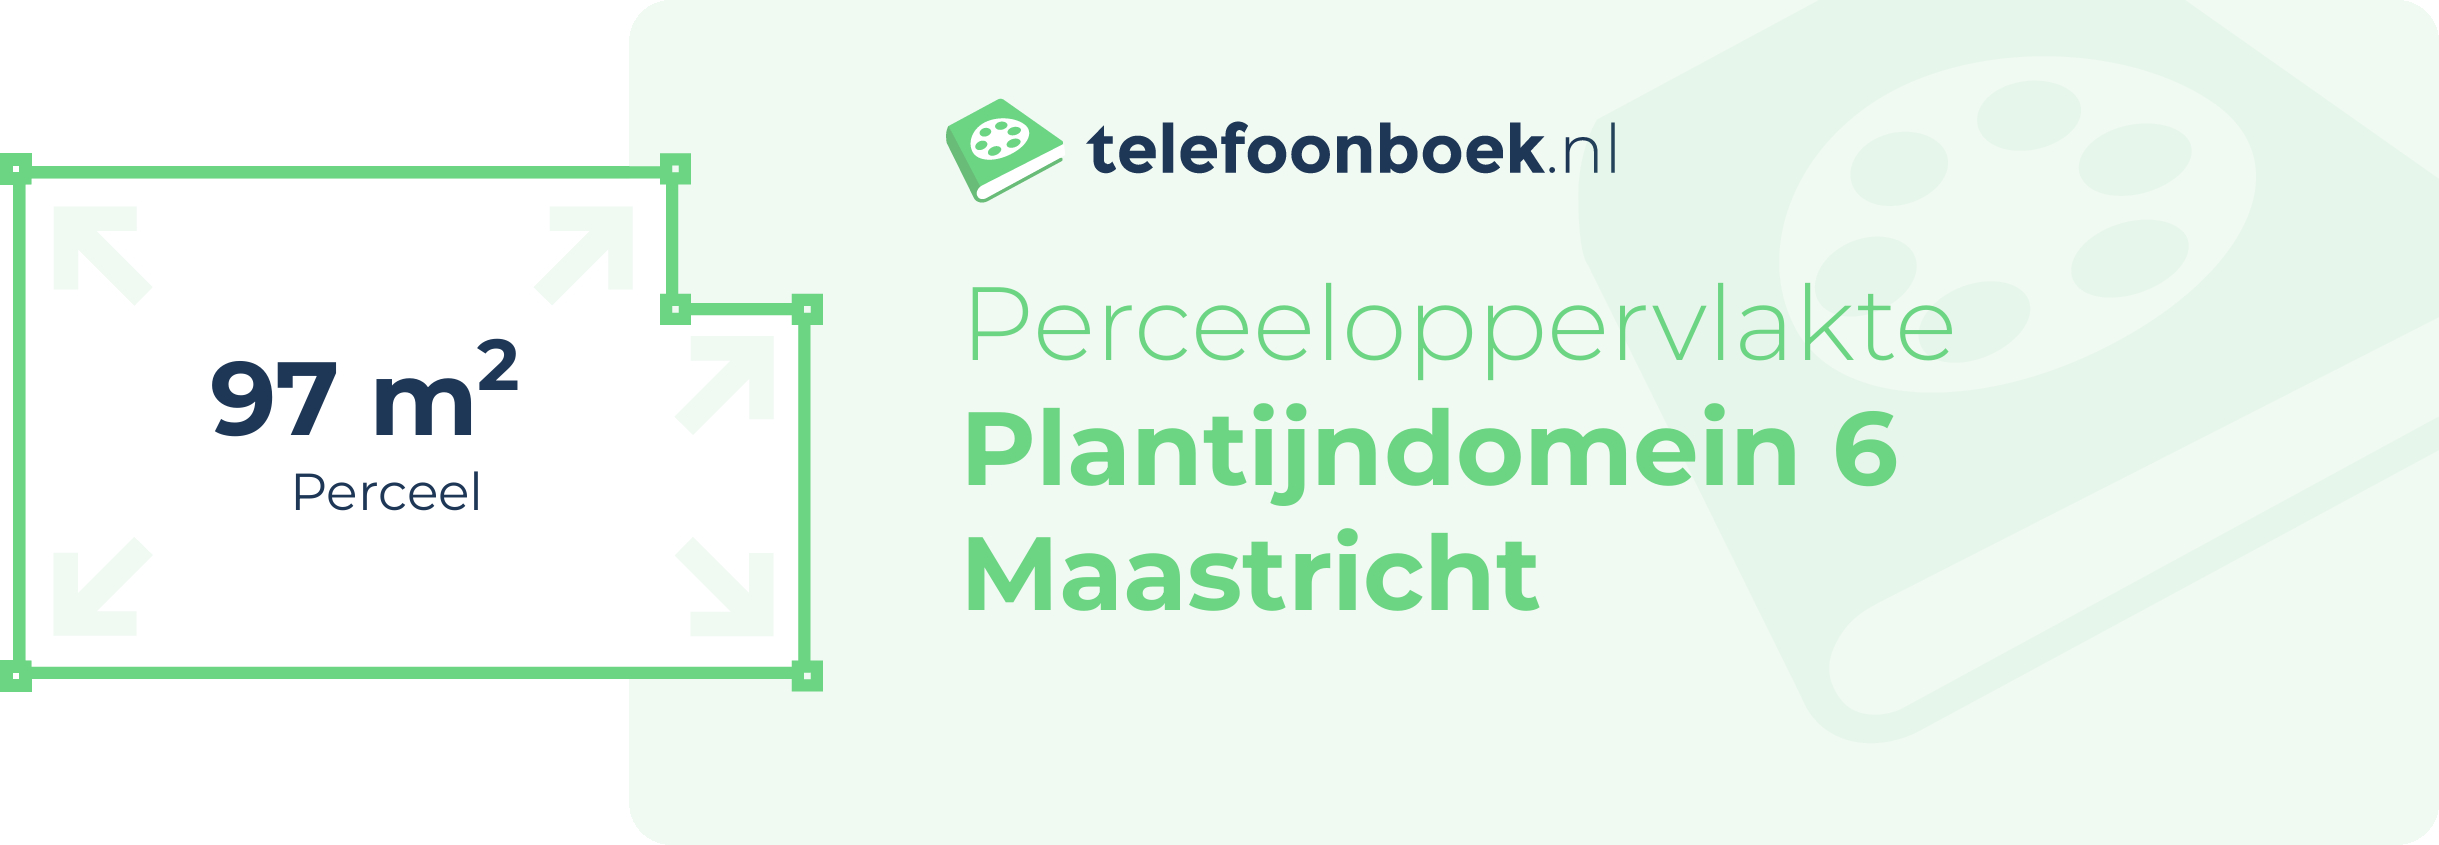 Perceeloppervlakte Plantijndomein 6 Maastricht